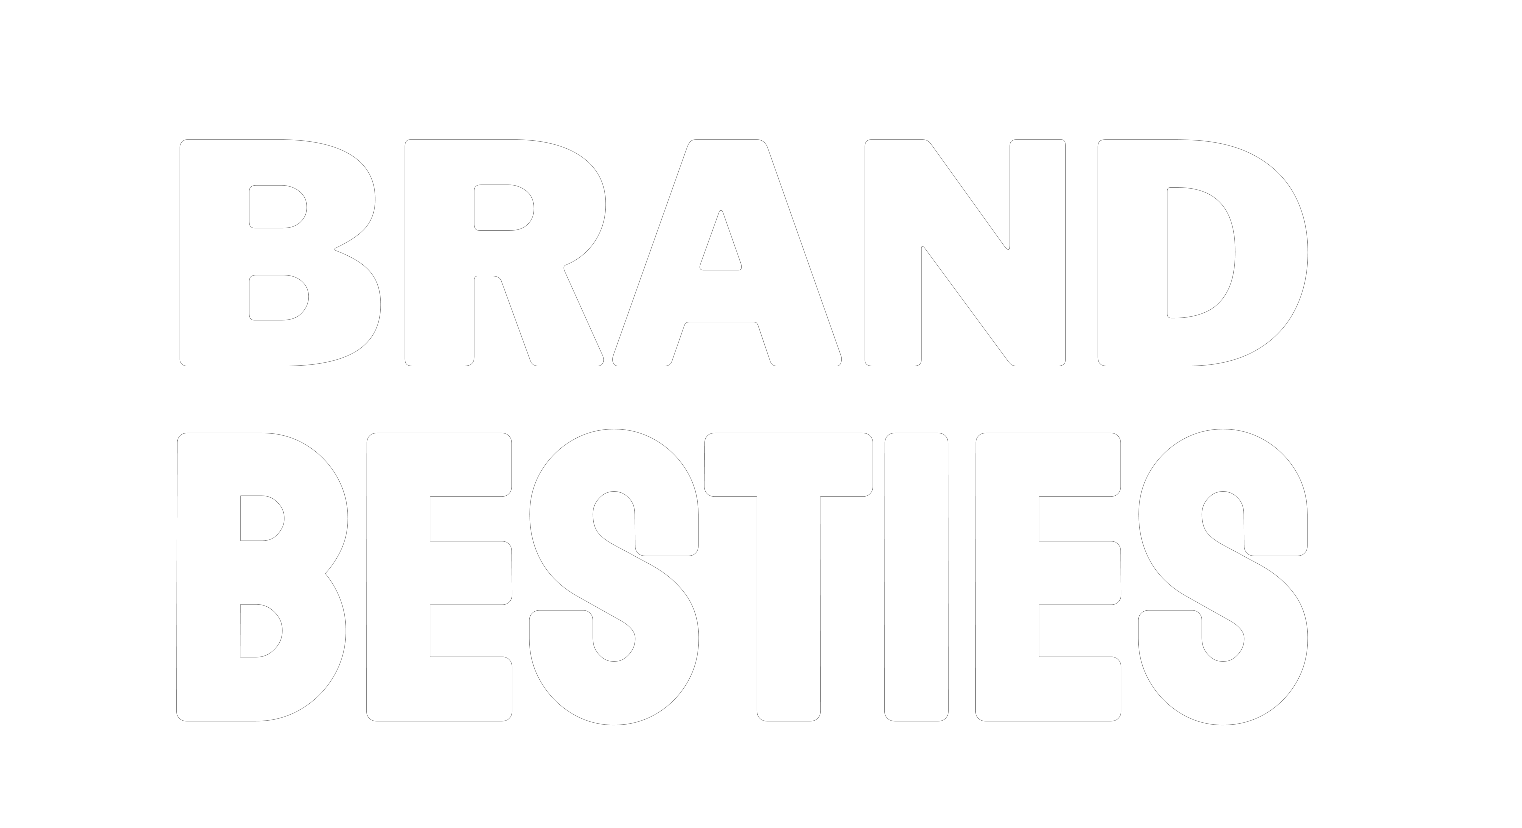 Brand Besties company logo